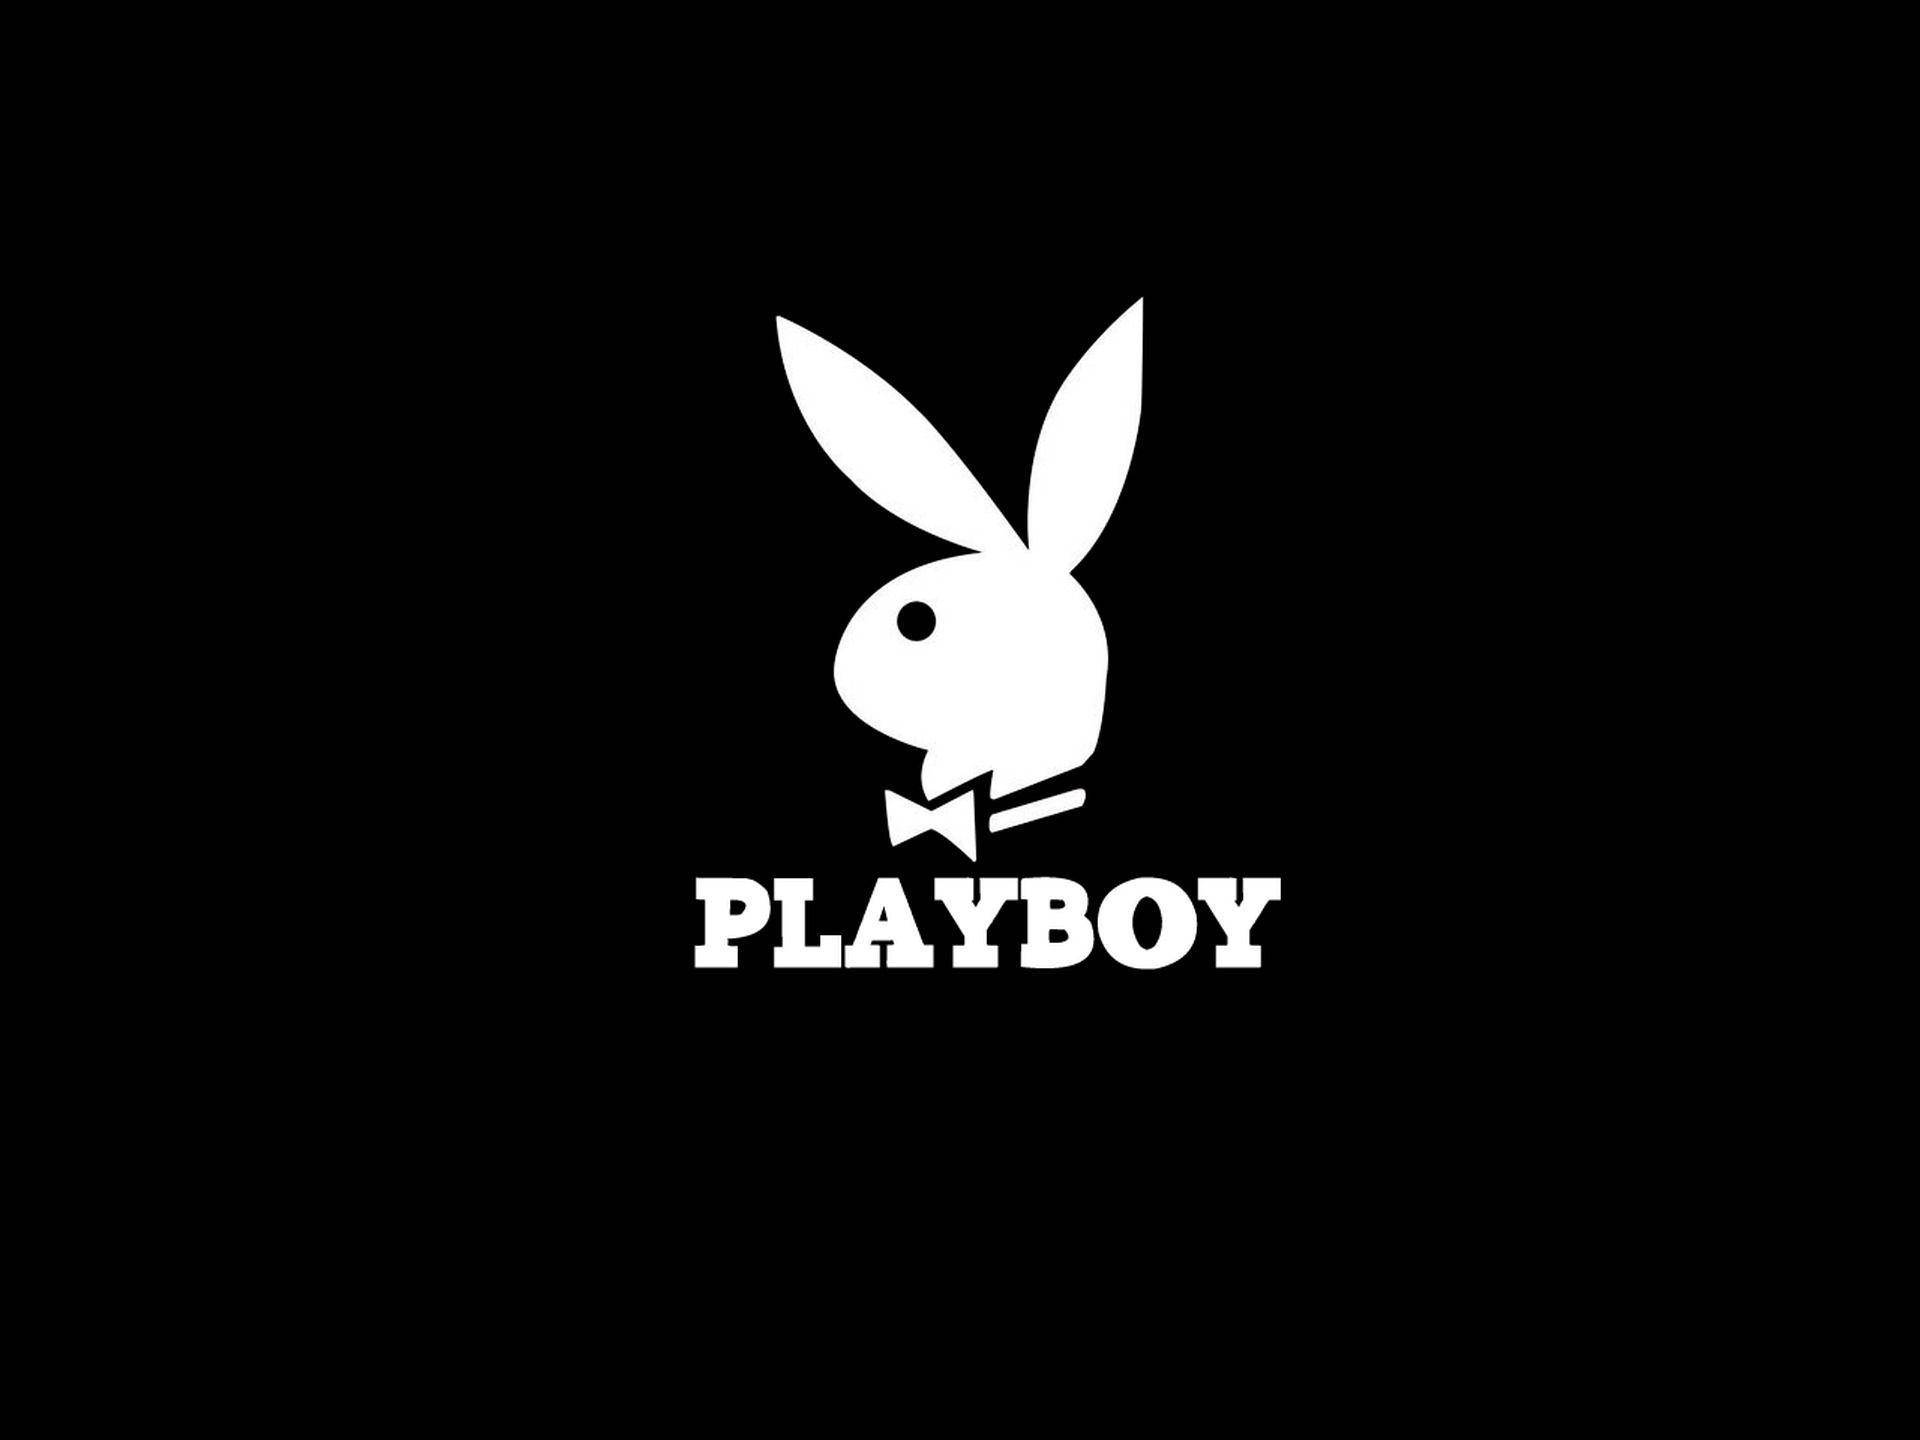 Playboy Logo On Black Background